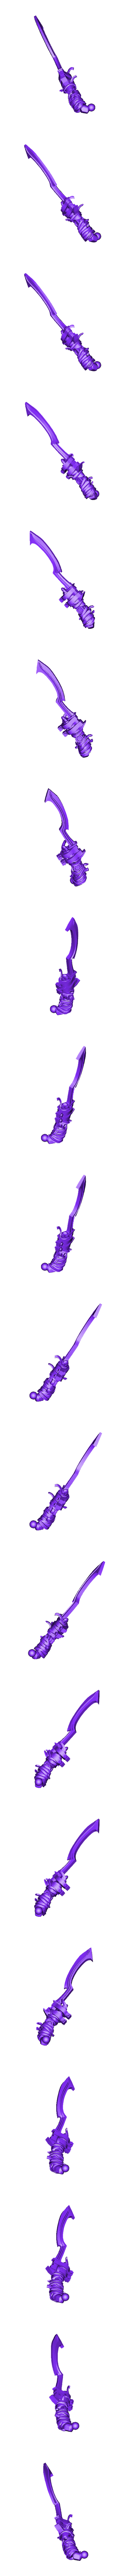 KhopeshWristbladeR-Arm5.stl Télécharger fichier STL Les momifiés - Les pharaons vedettes • Design imprimable en 3D, Star_Pharaoh_Foundry